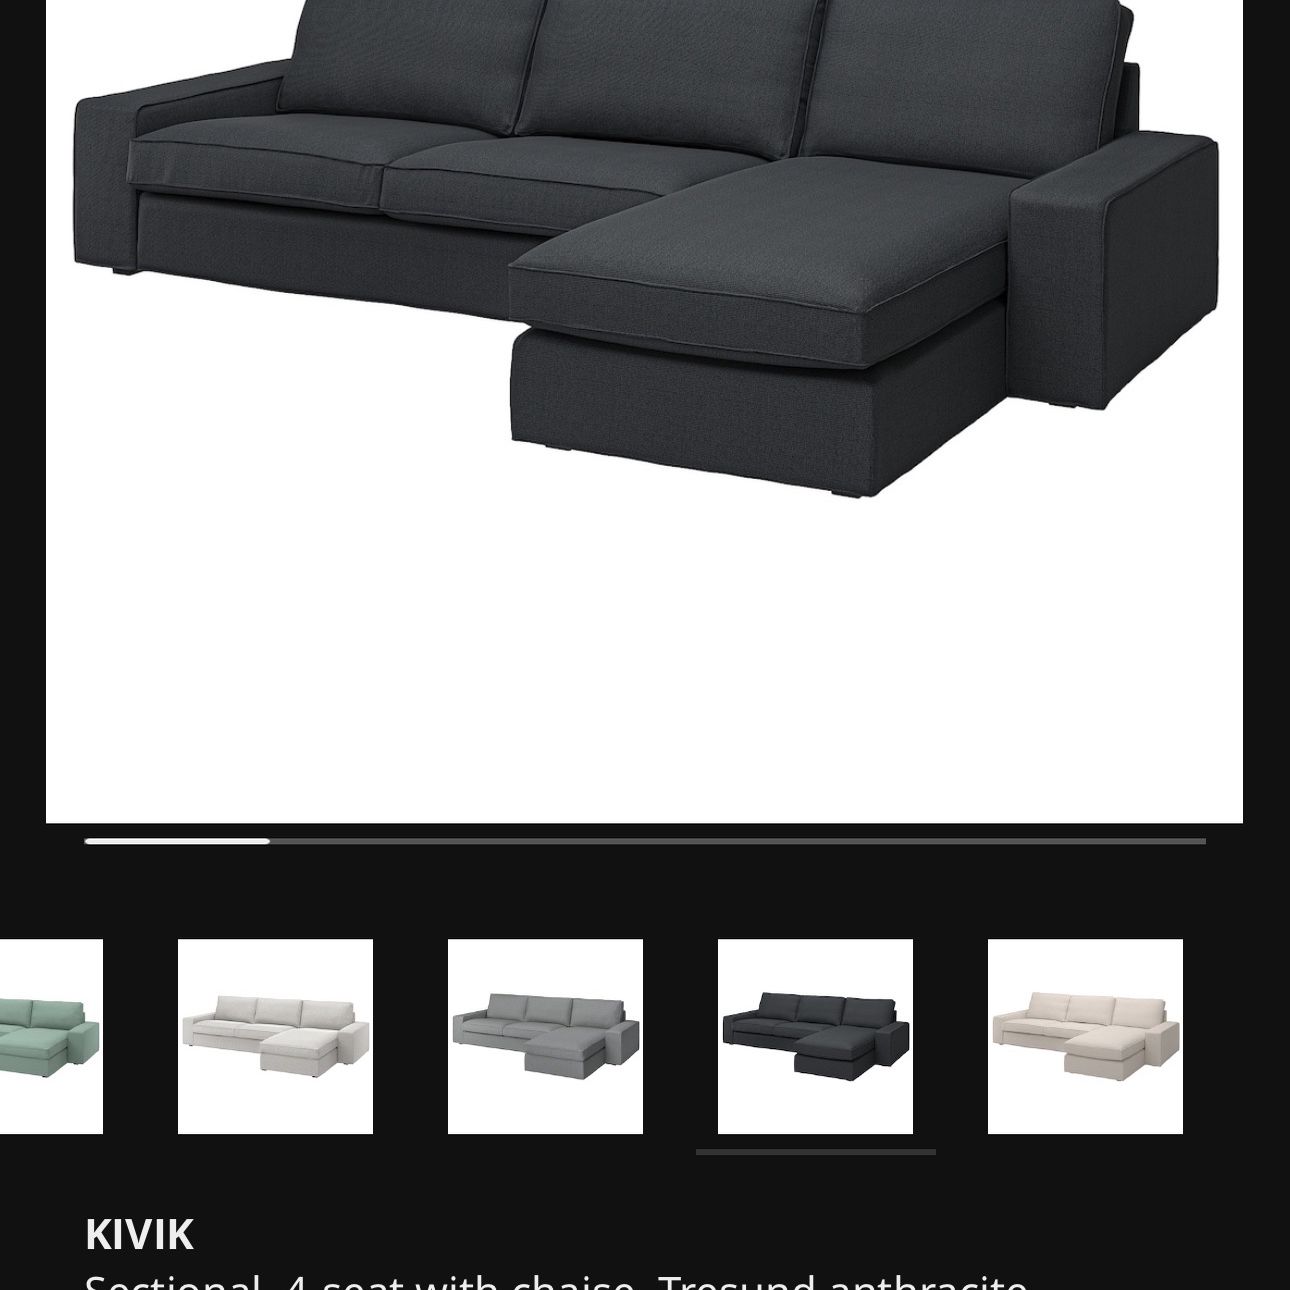 IKEA Kivik Sectional